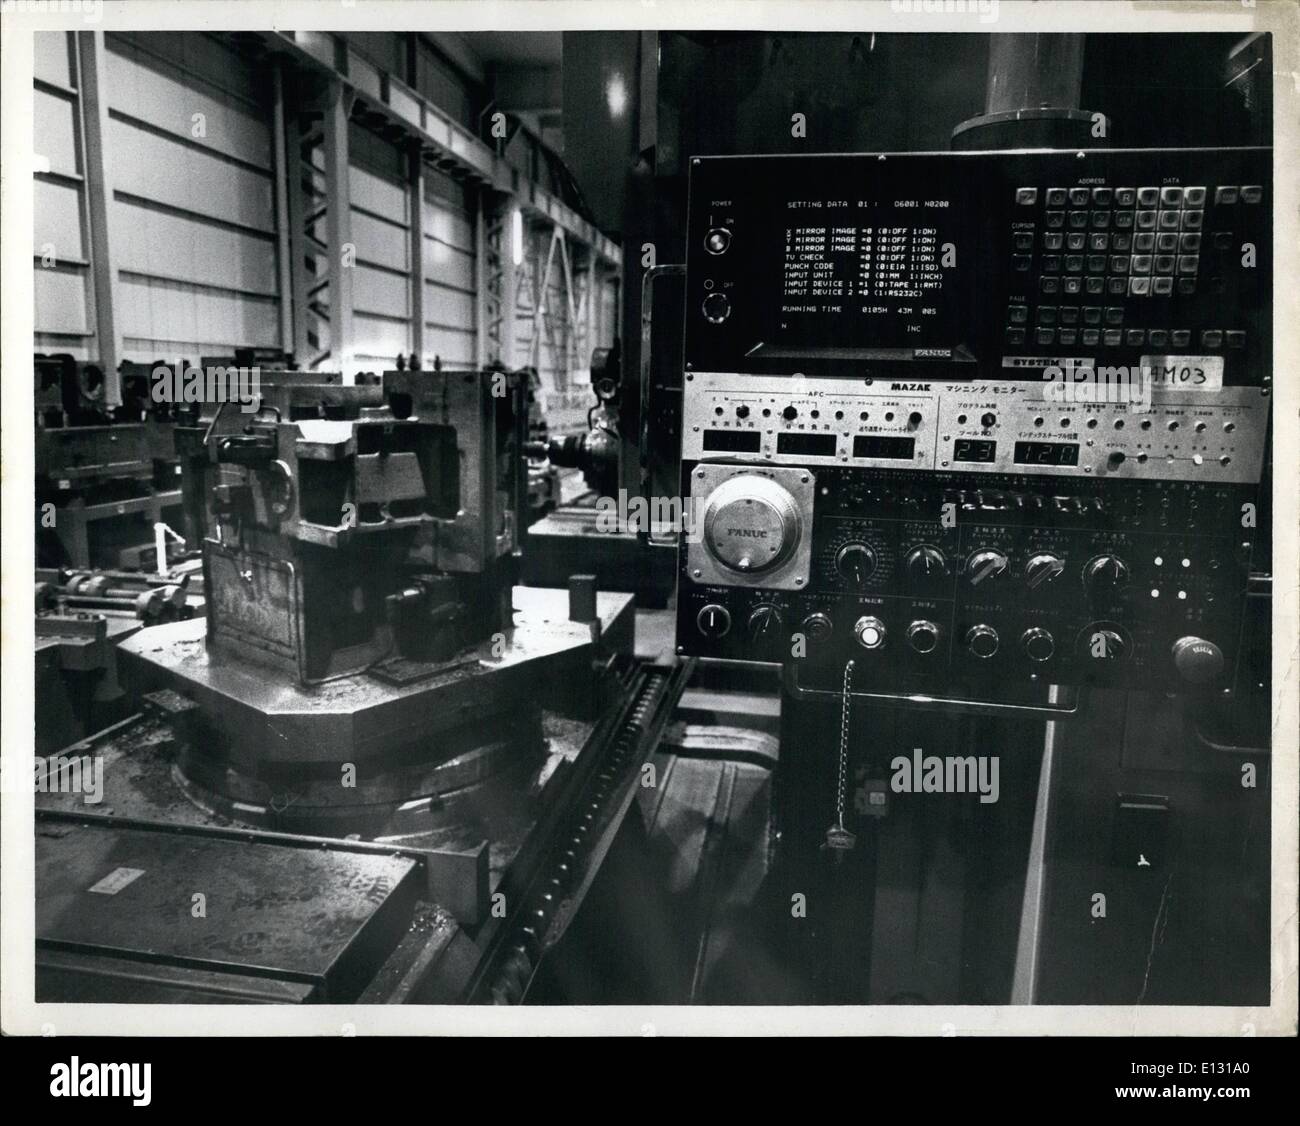 Feb. 26, 2012 - Yamazaki Machinery Works Ltd. Nagoya Japan Ã¢â‚¬â€œ Totally automated computer controlled machinery works. OPS: Stock Photo